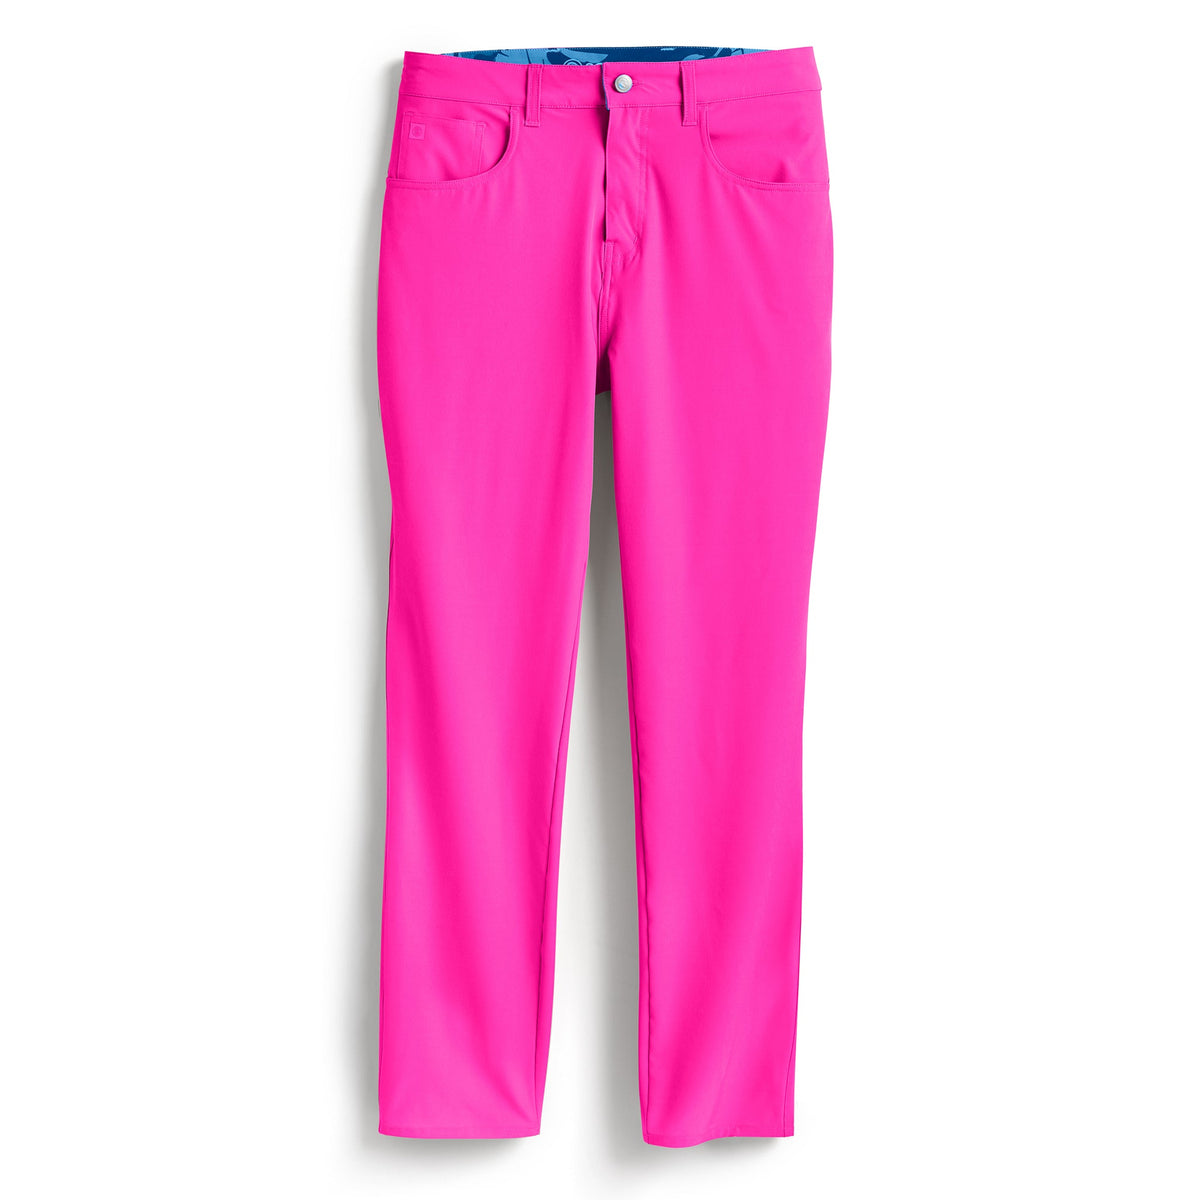 All Tides Pants - 5 Pockets (Seasonal Colors) - Hot Pink / W30/30